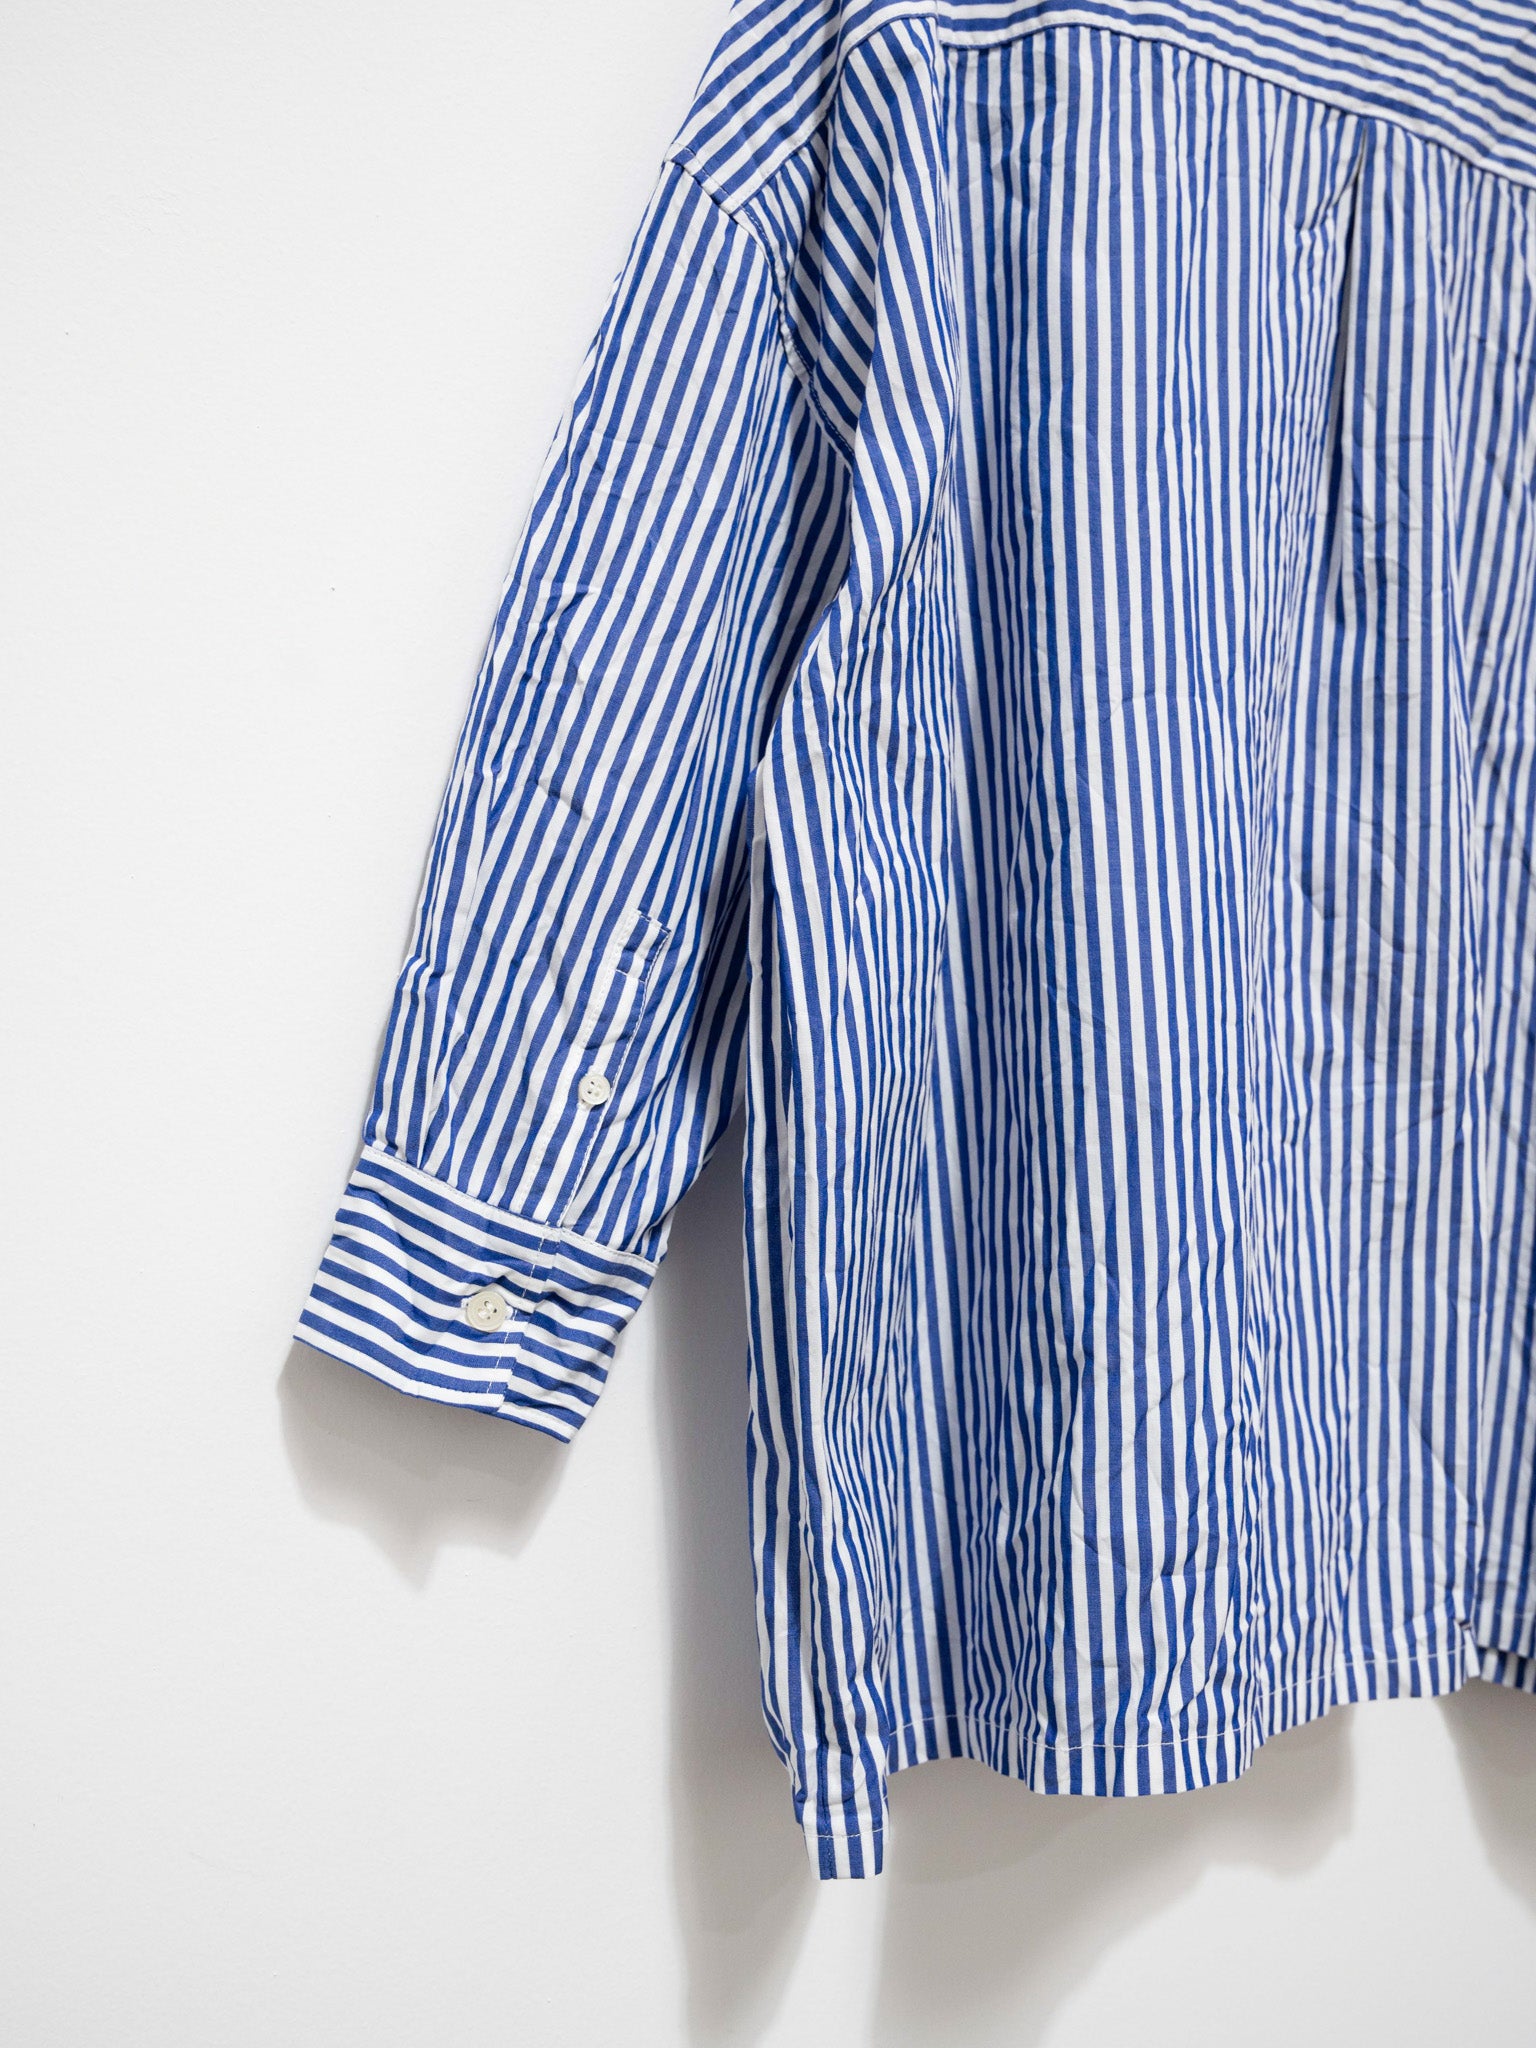 Namu Shop - ICHI Washer BD Shirt - Blue Stripe